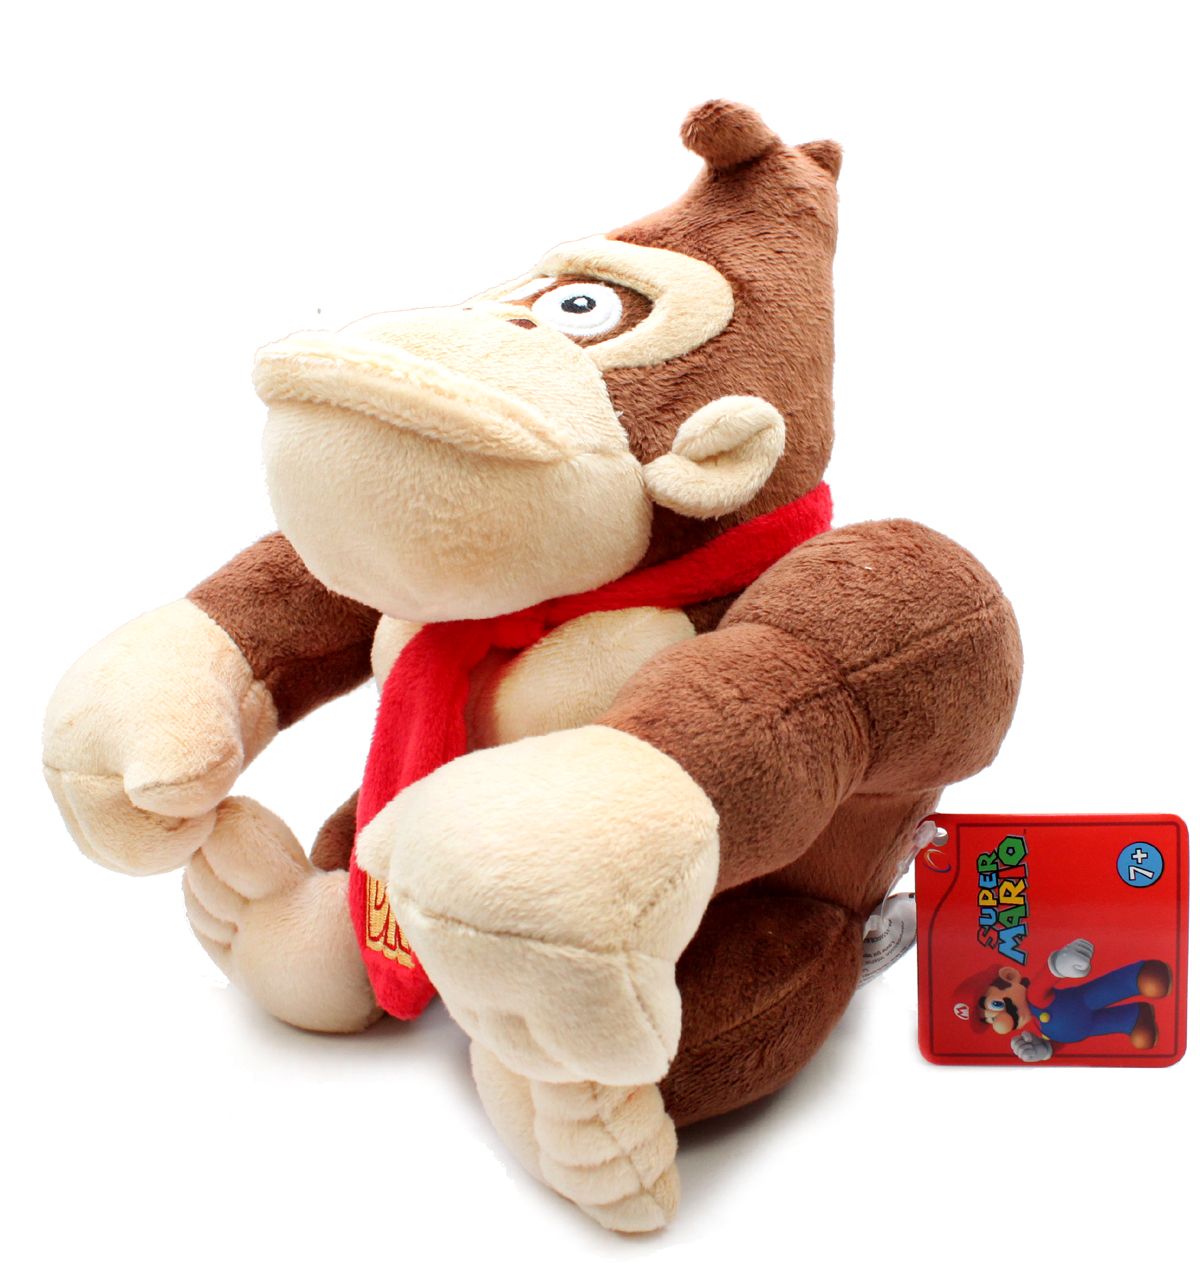 Authentic Brand New Global Holdings Super Mario Plush   9 Donkey Kong